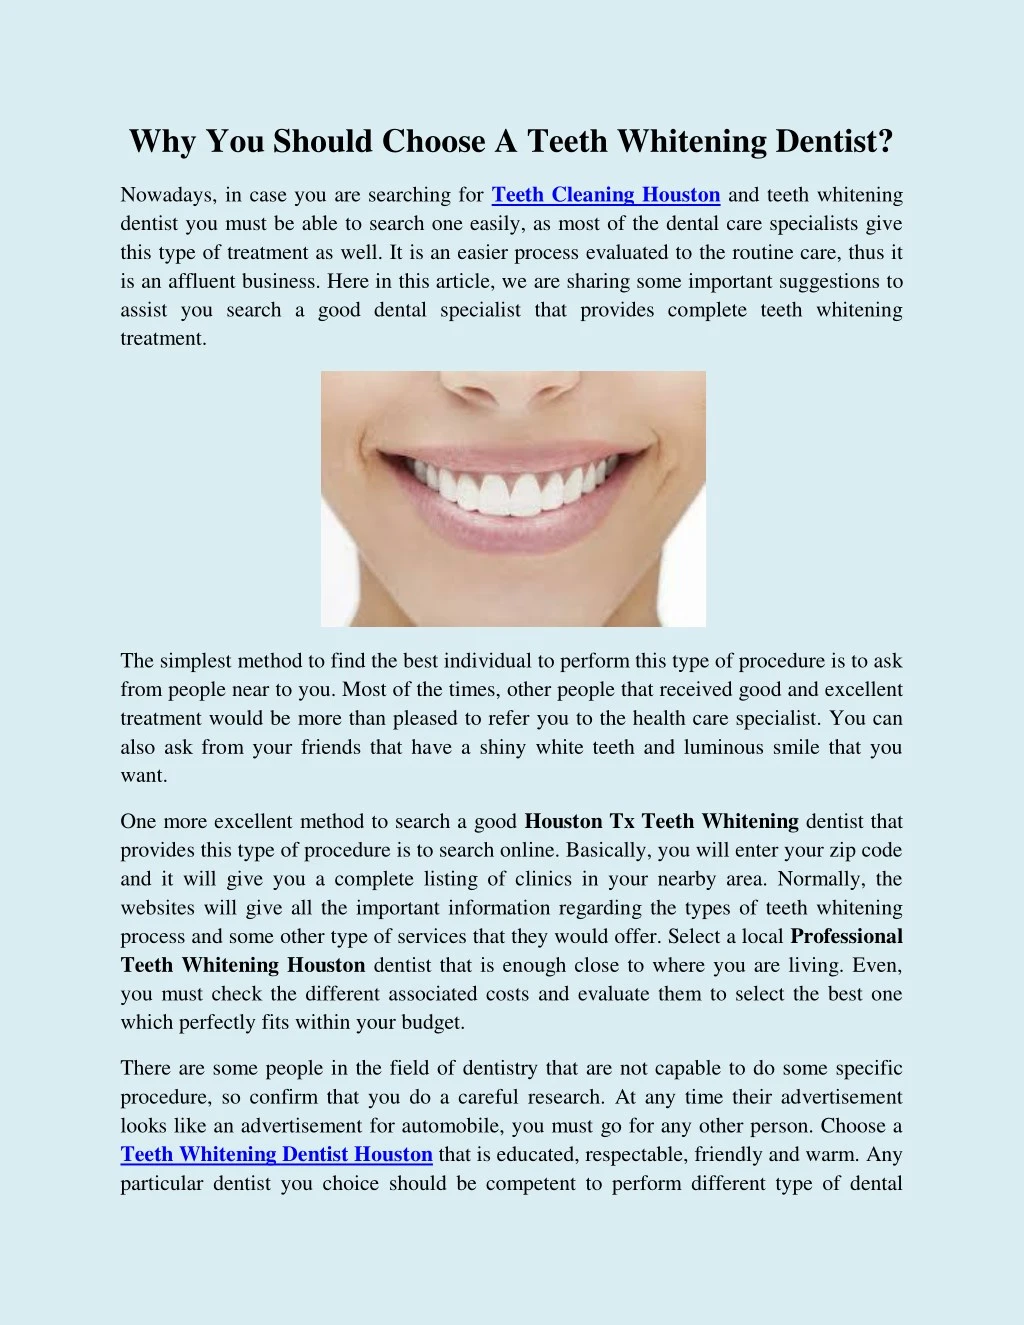 why you should choose a teeth whitening dentist